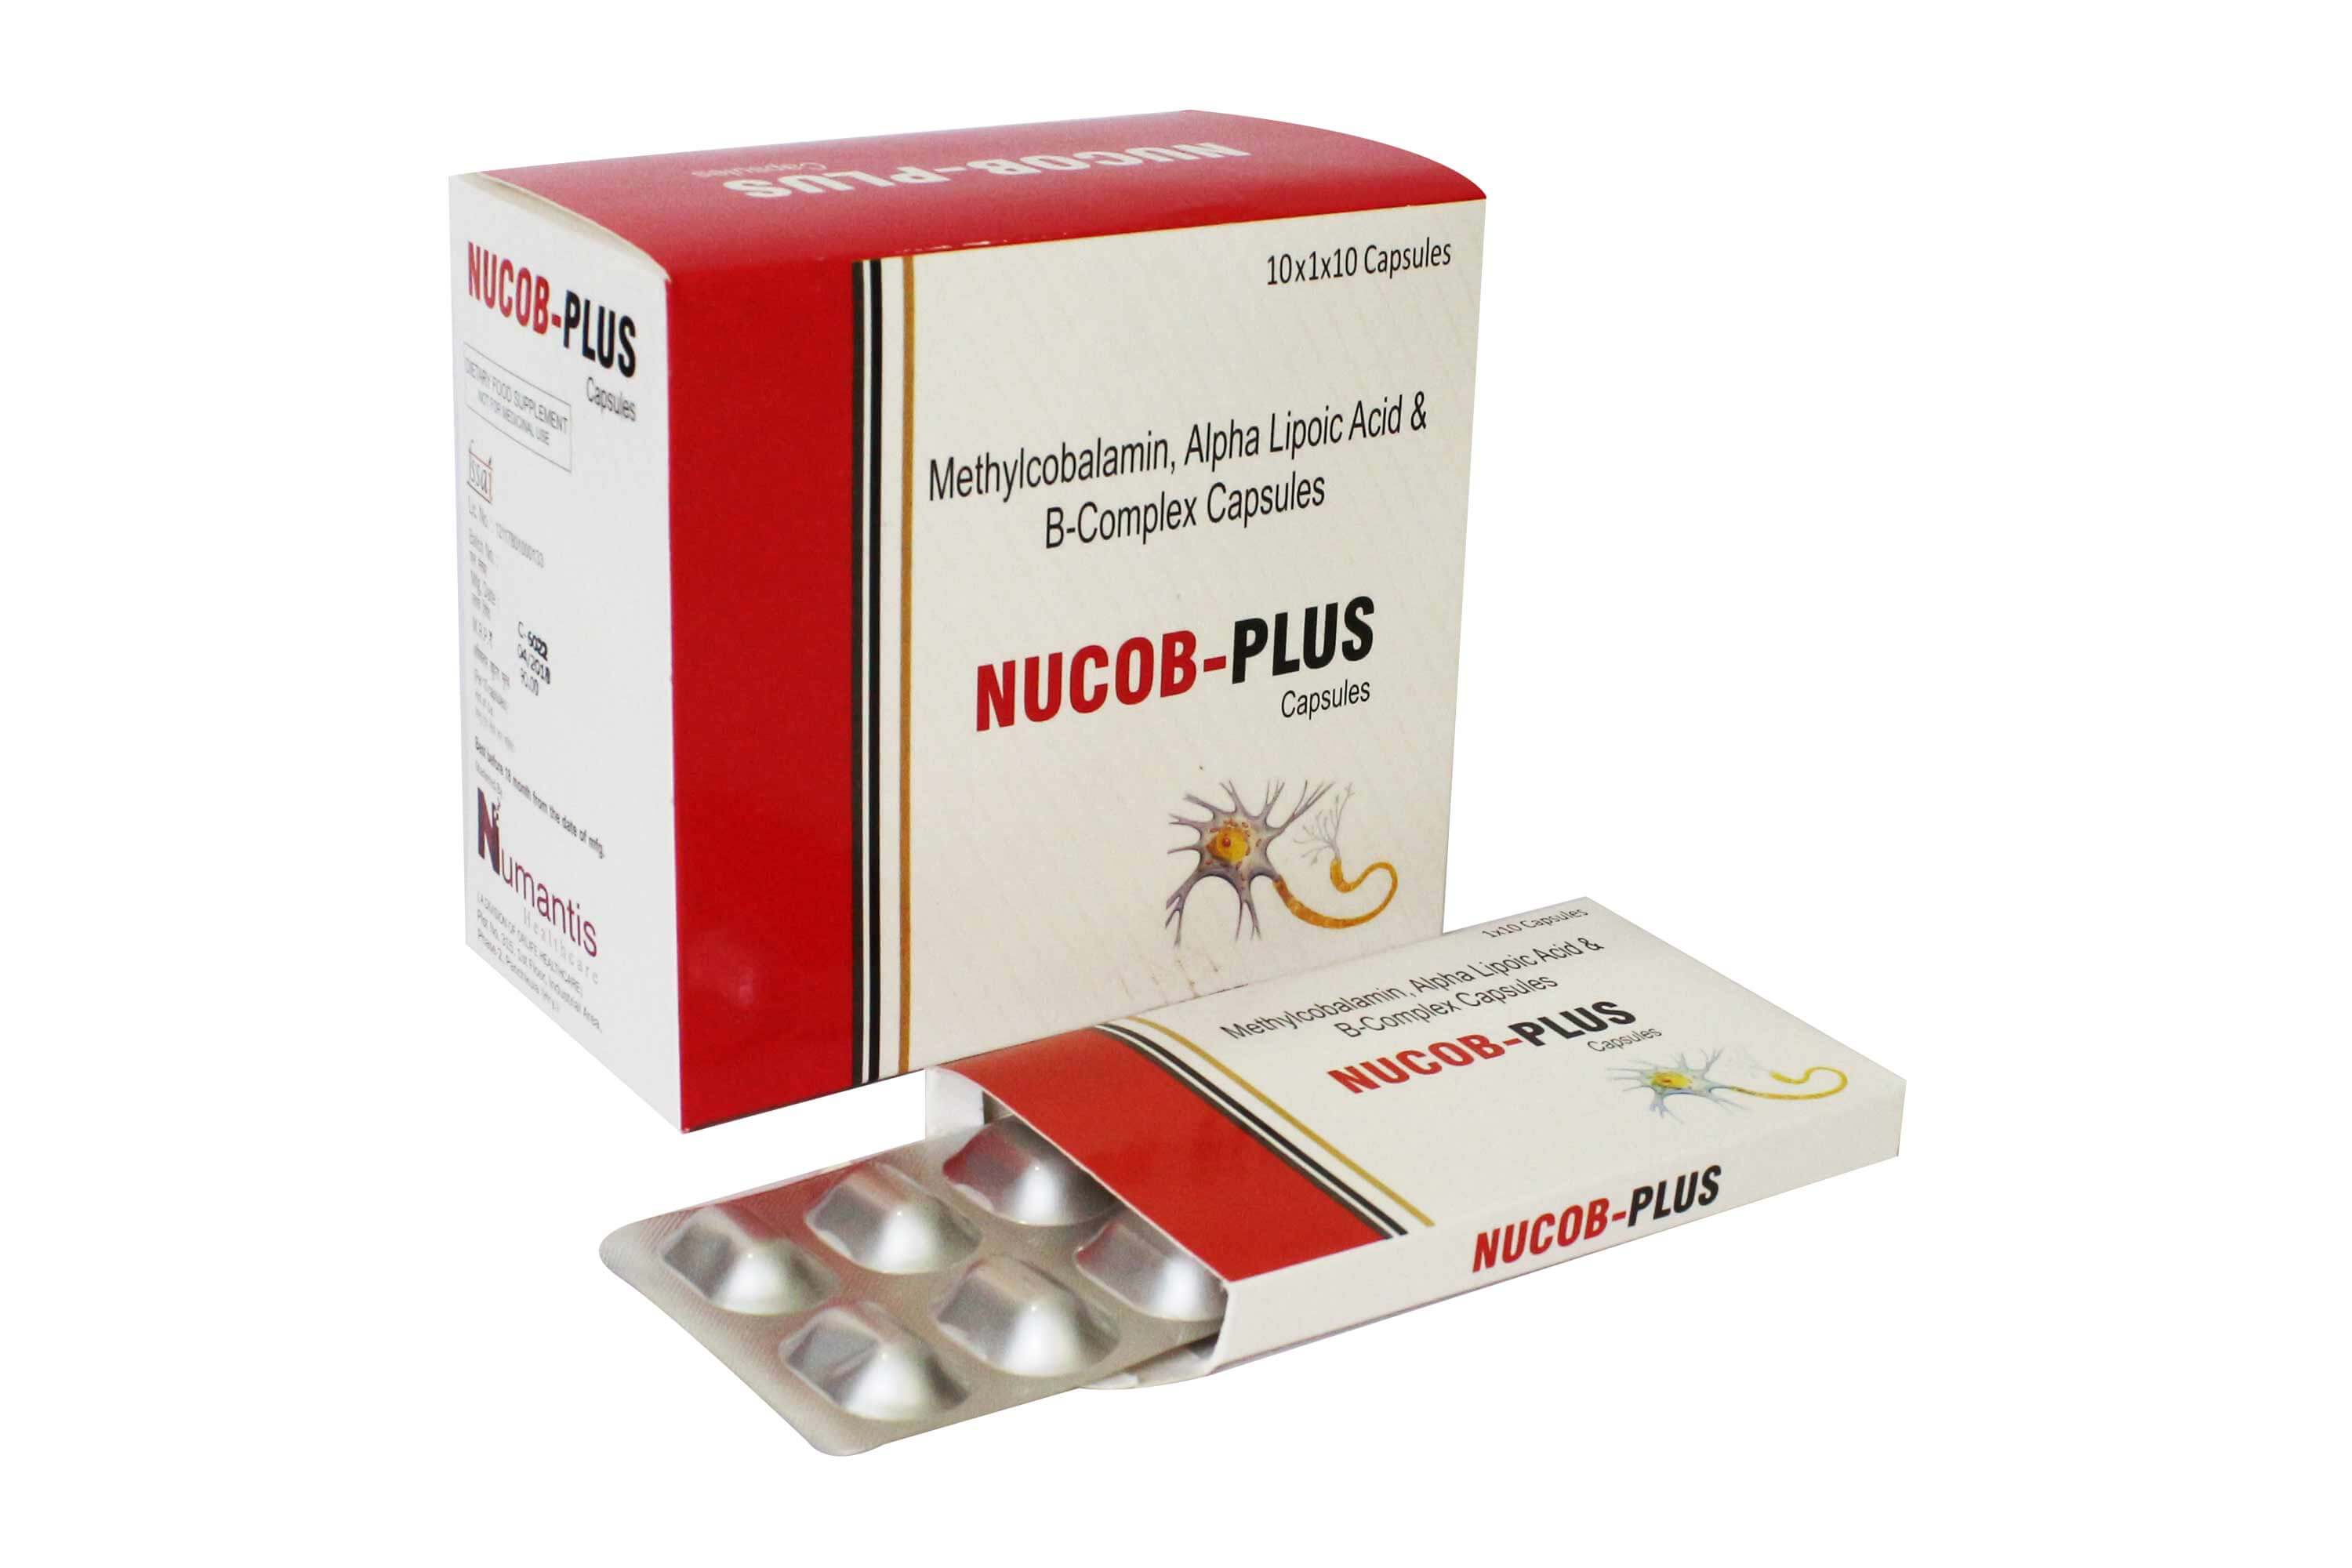 Product Name: Nucob Plus, Compositions of Nucob Plus are Methylcobalamin Alpha Lipoic Acid & B-Complex Capsules - Numantis Healthcare